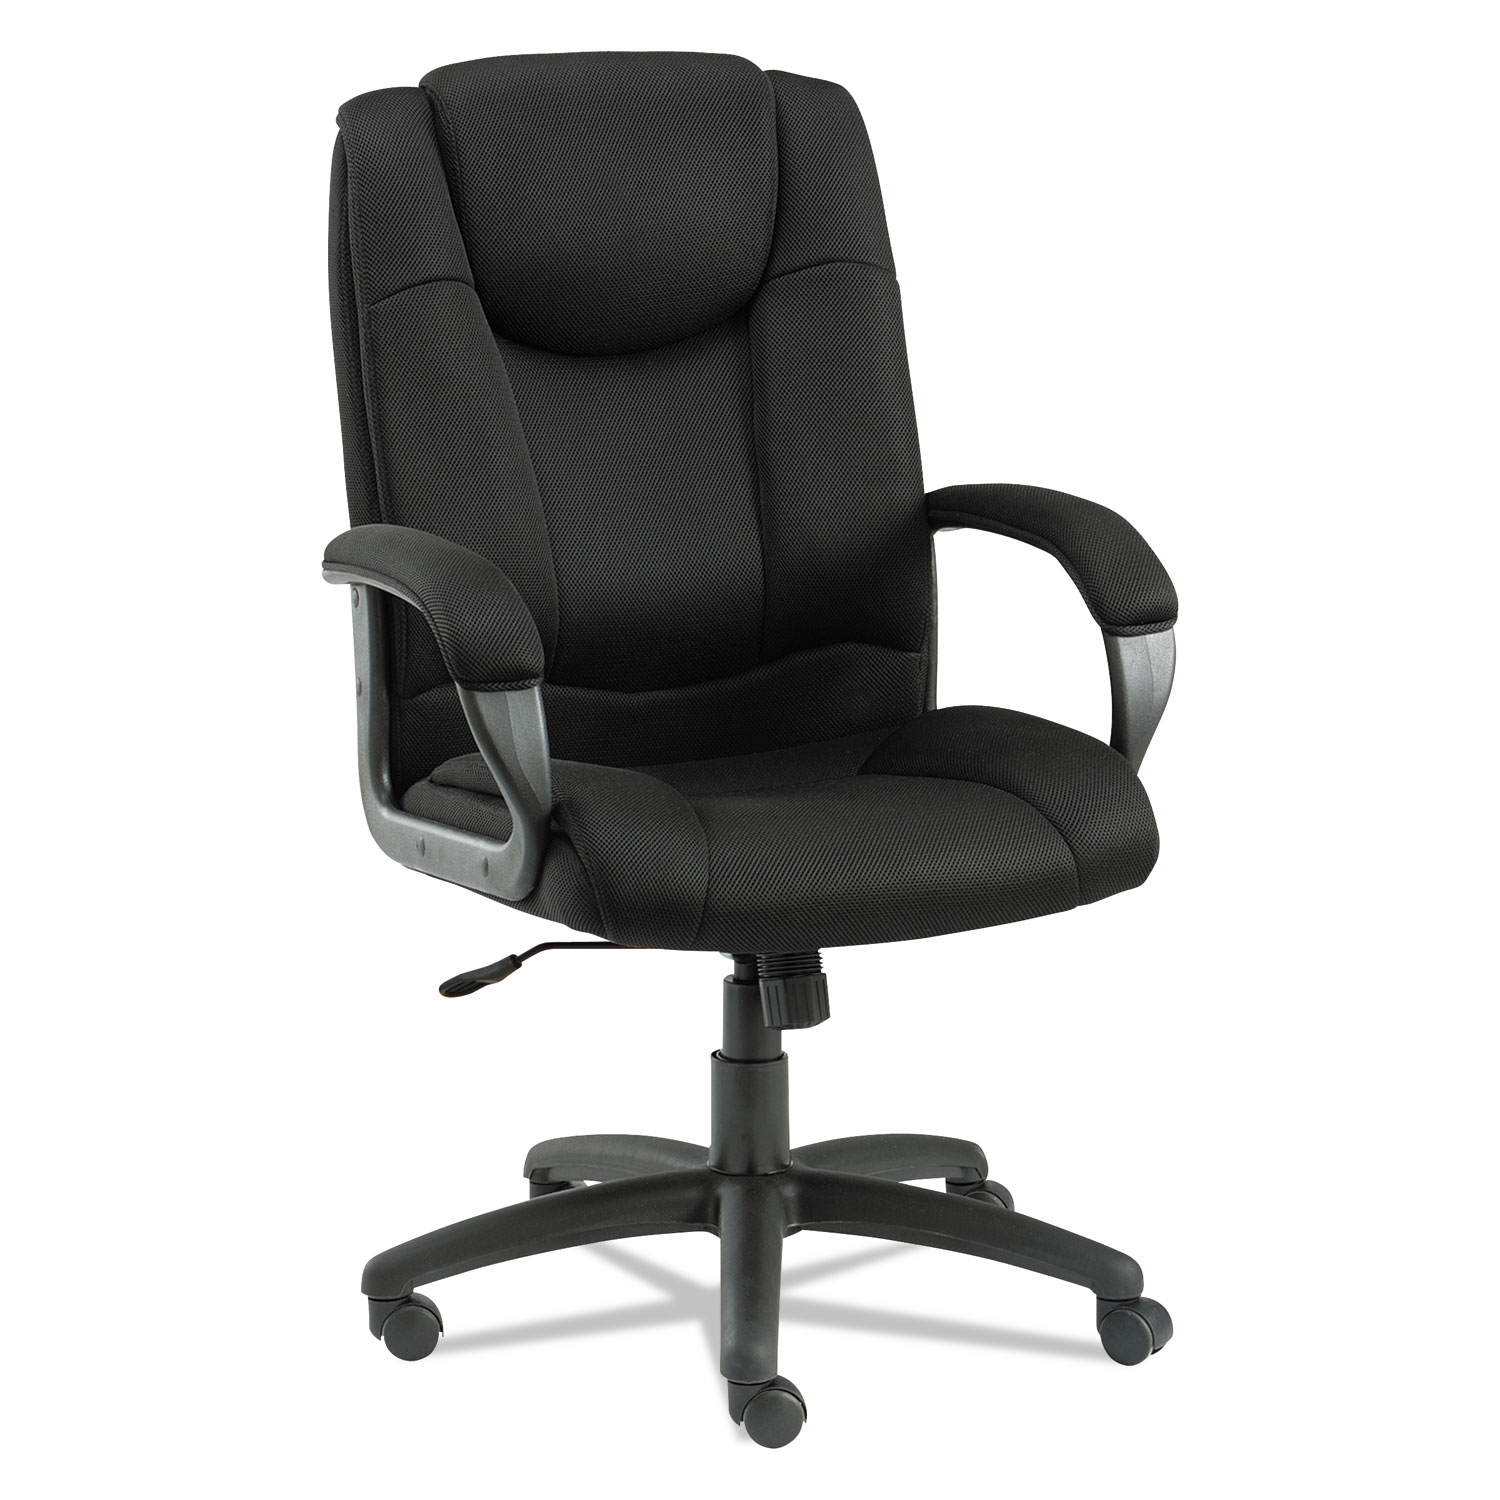  Alera ALELG41ME10B Alera Logan Series Mesh High-Back Swivel/Tilt Chair, Supports up to 275 lbs., Black Seat/Black Back, Black Base (ALELG41ME10B) 